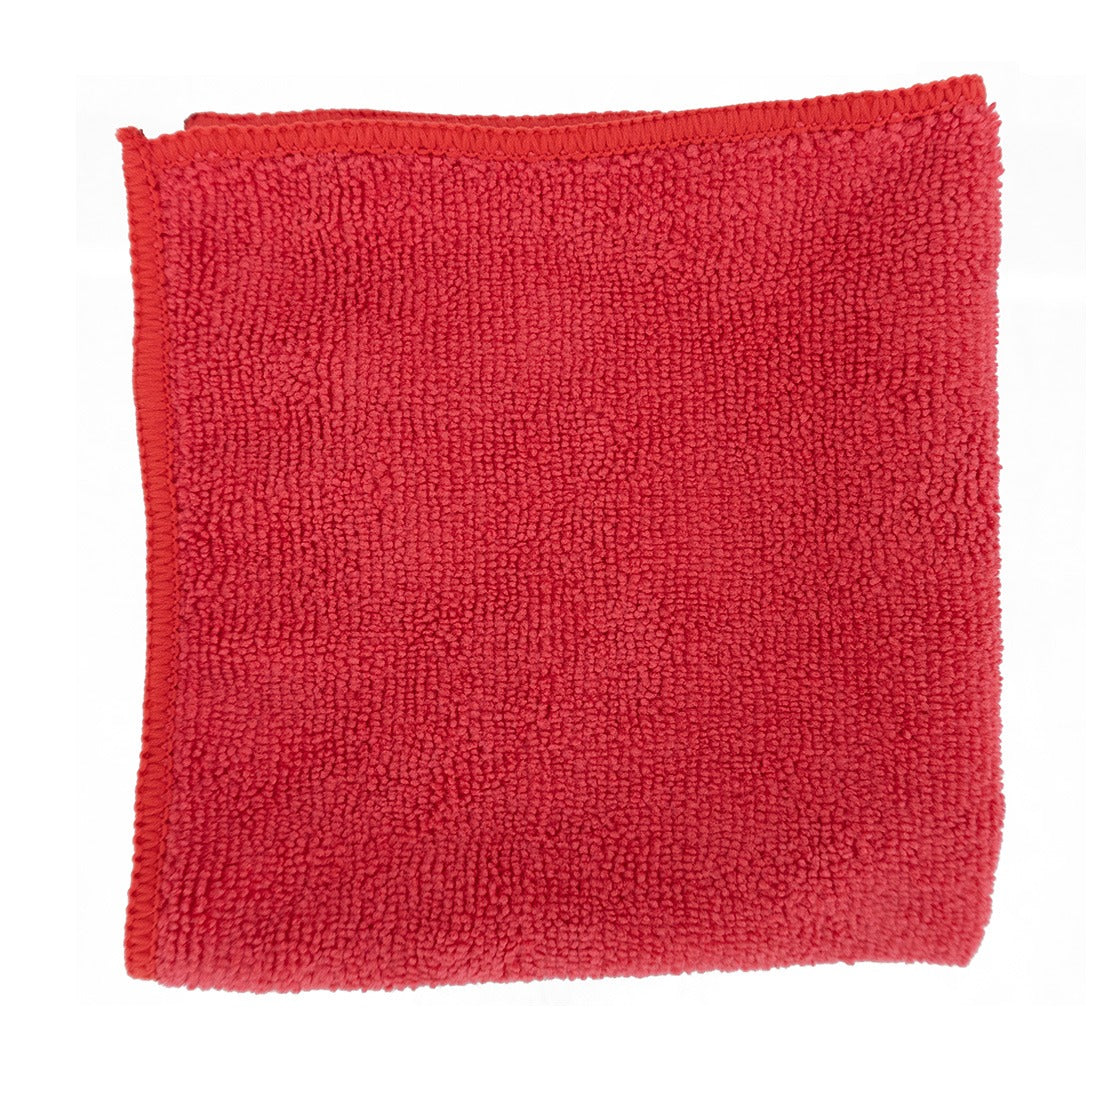 XERO Microfiber Towel Red Back View